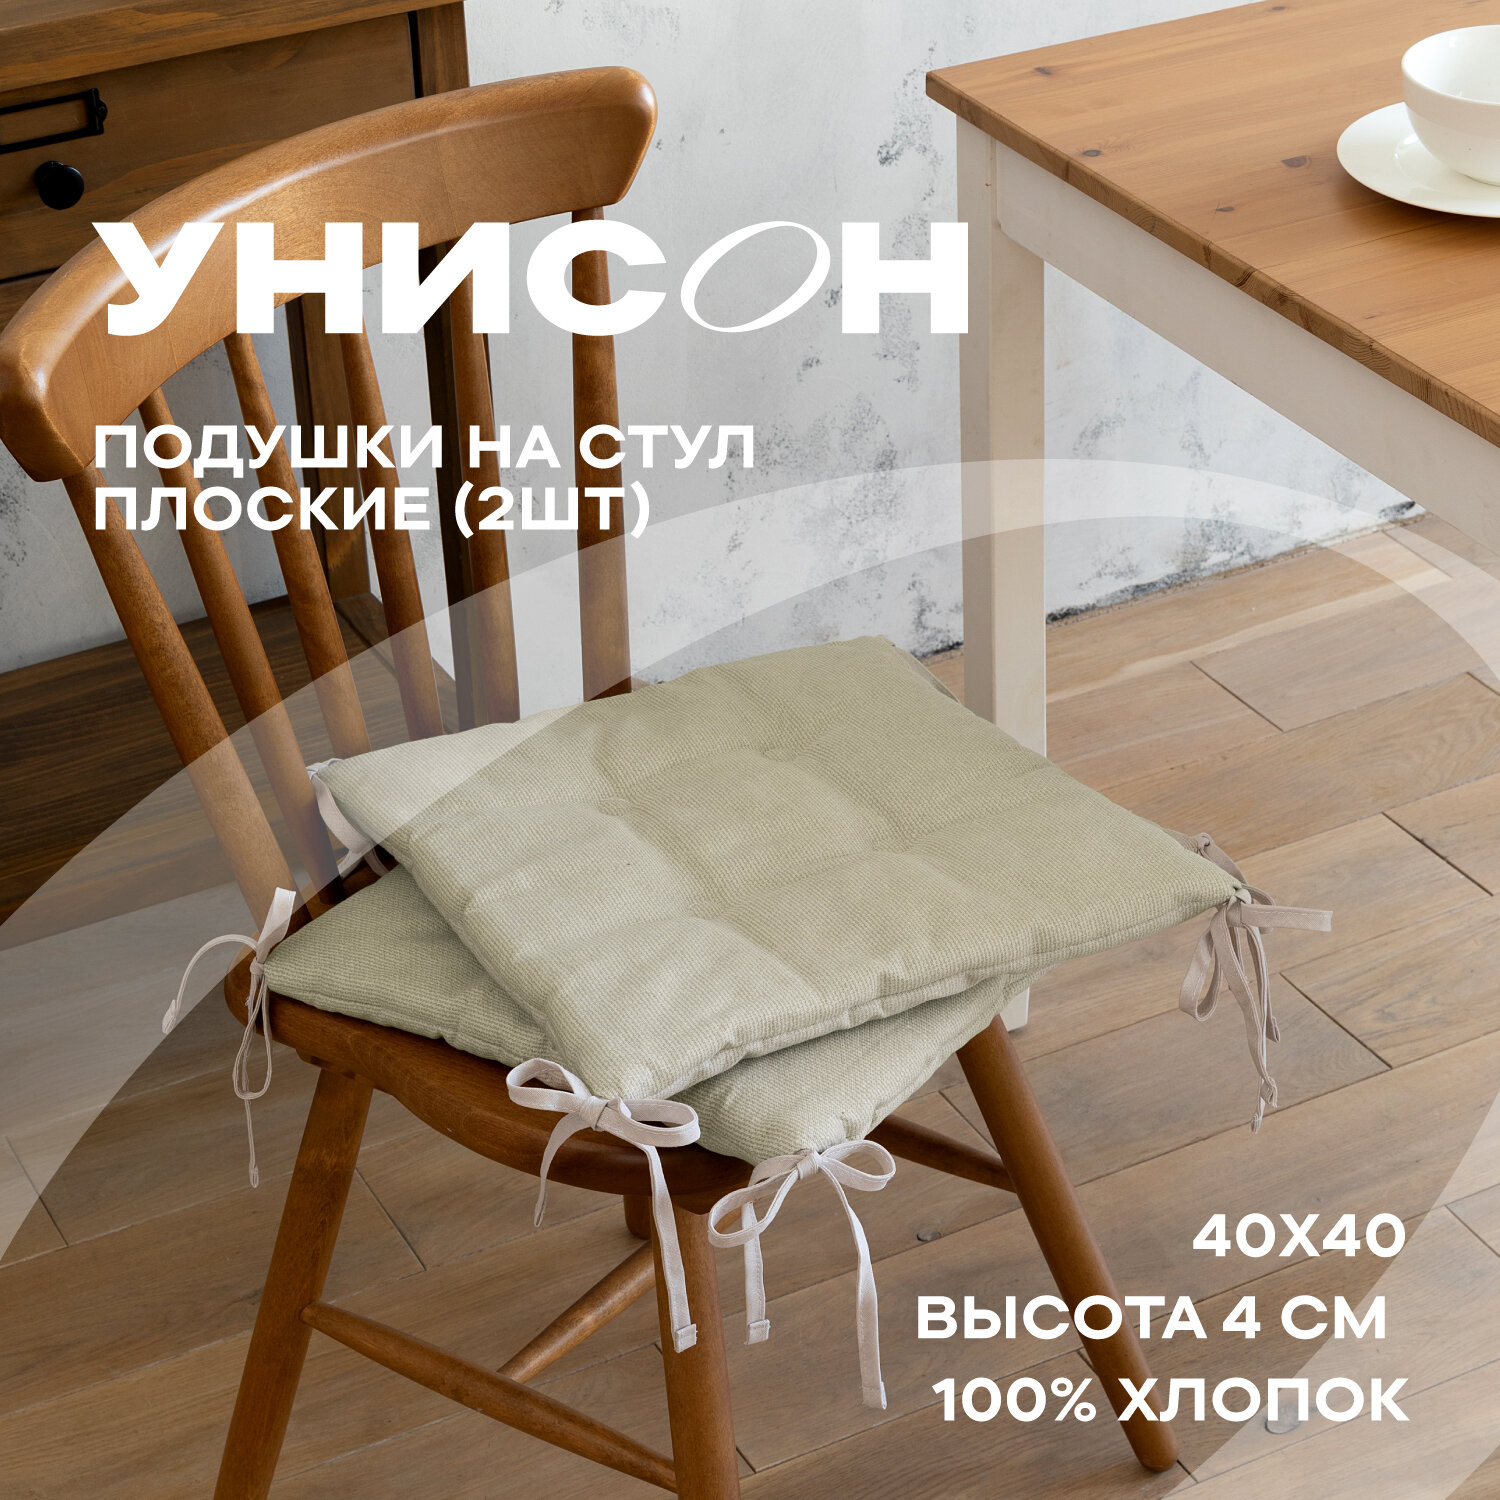 Комплект подушек на стул плоских 40х40 (2 шт) "Унисон" рис 30004-15 Basic бежевый